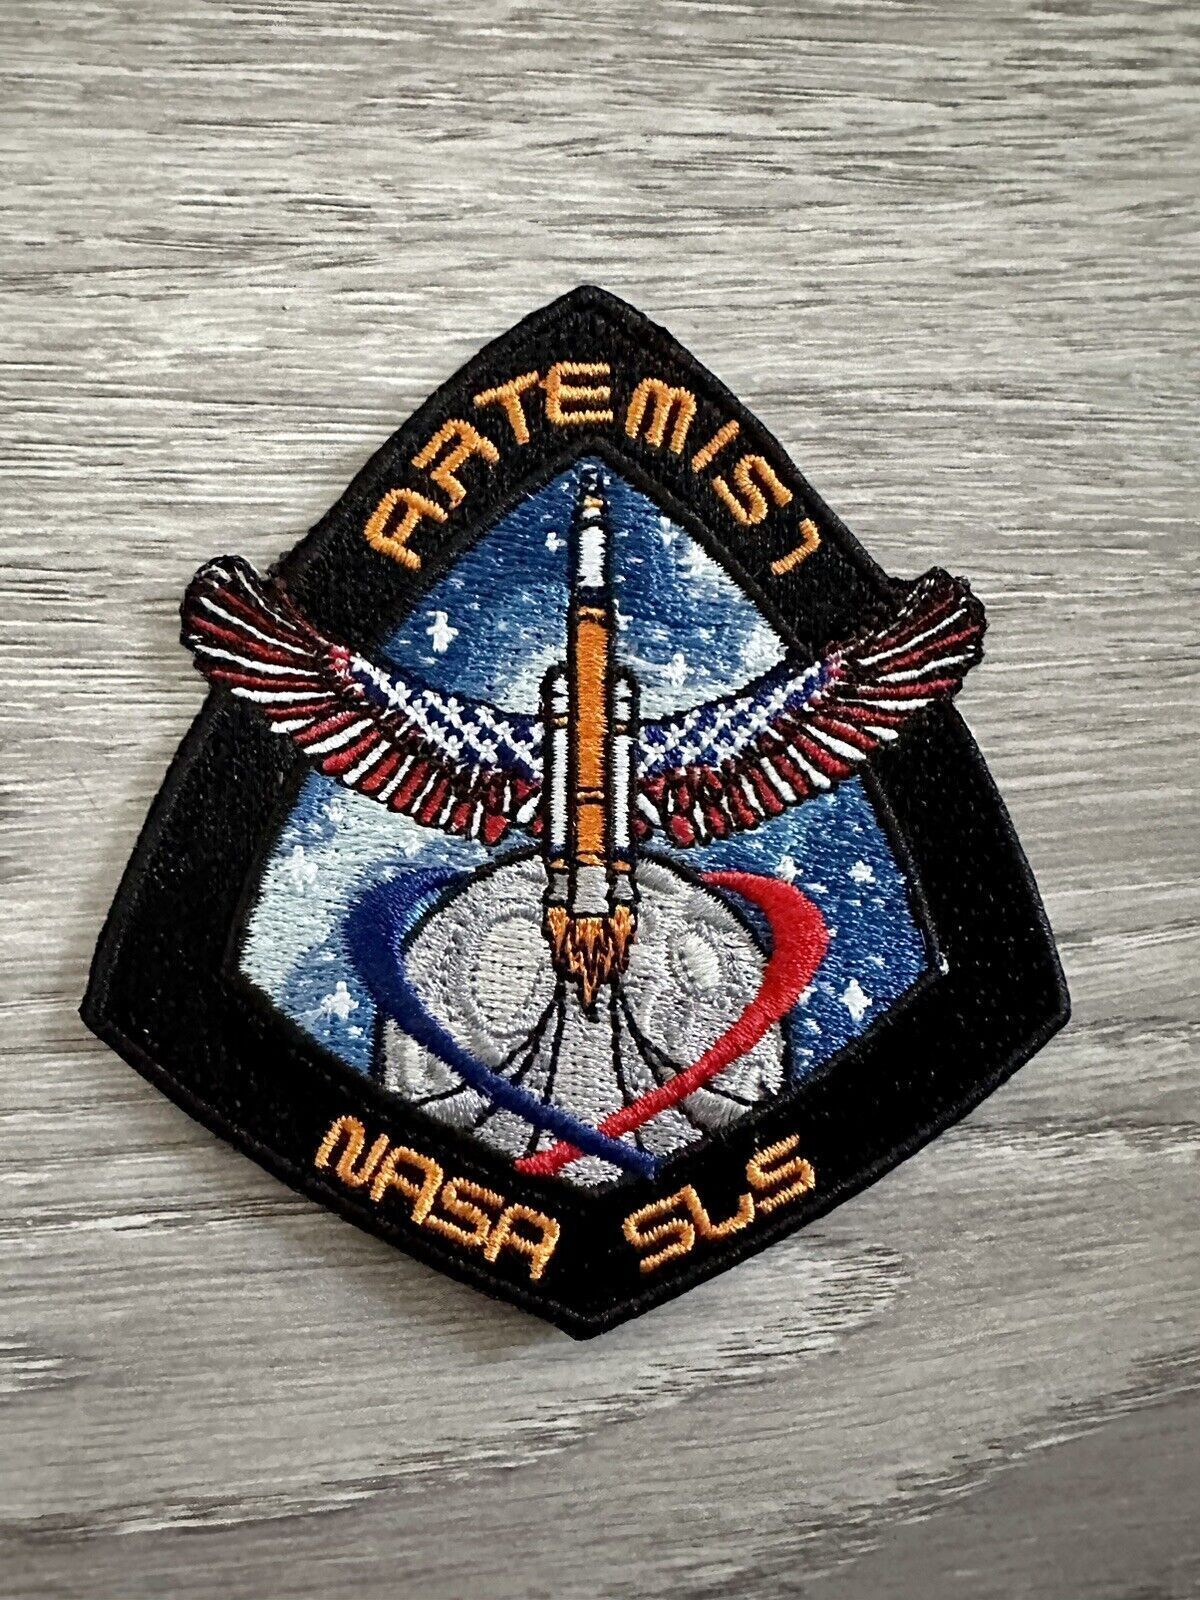 ARTEMIS PROGRAM - NASA SLS MOON ASTRONAUT MISSION PATCH - 3.5” USA EAGLE